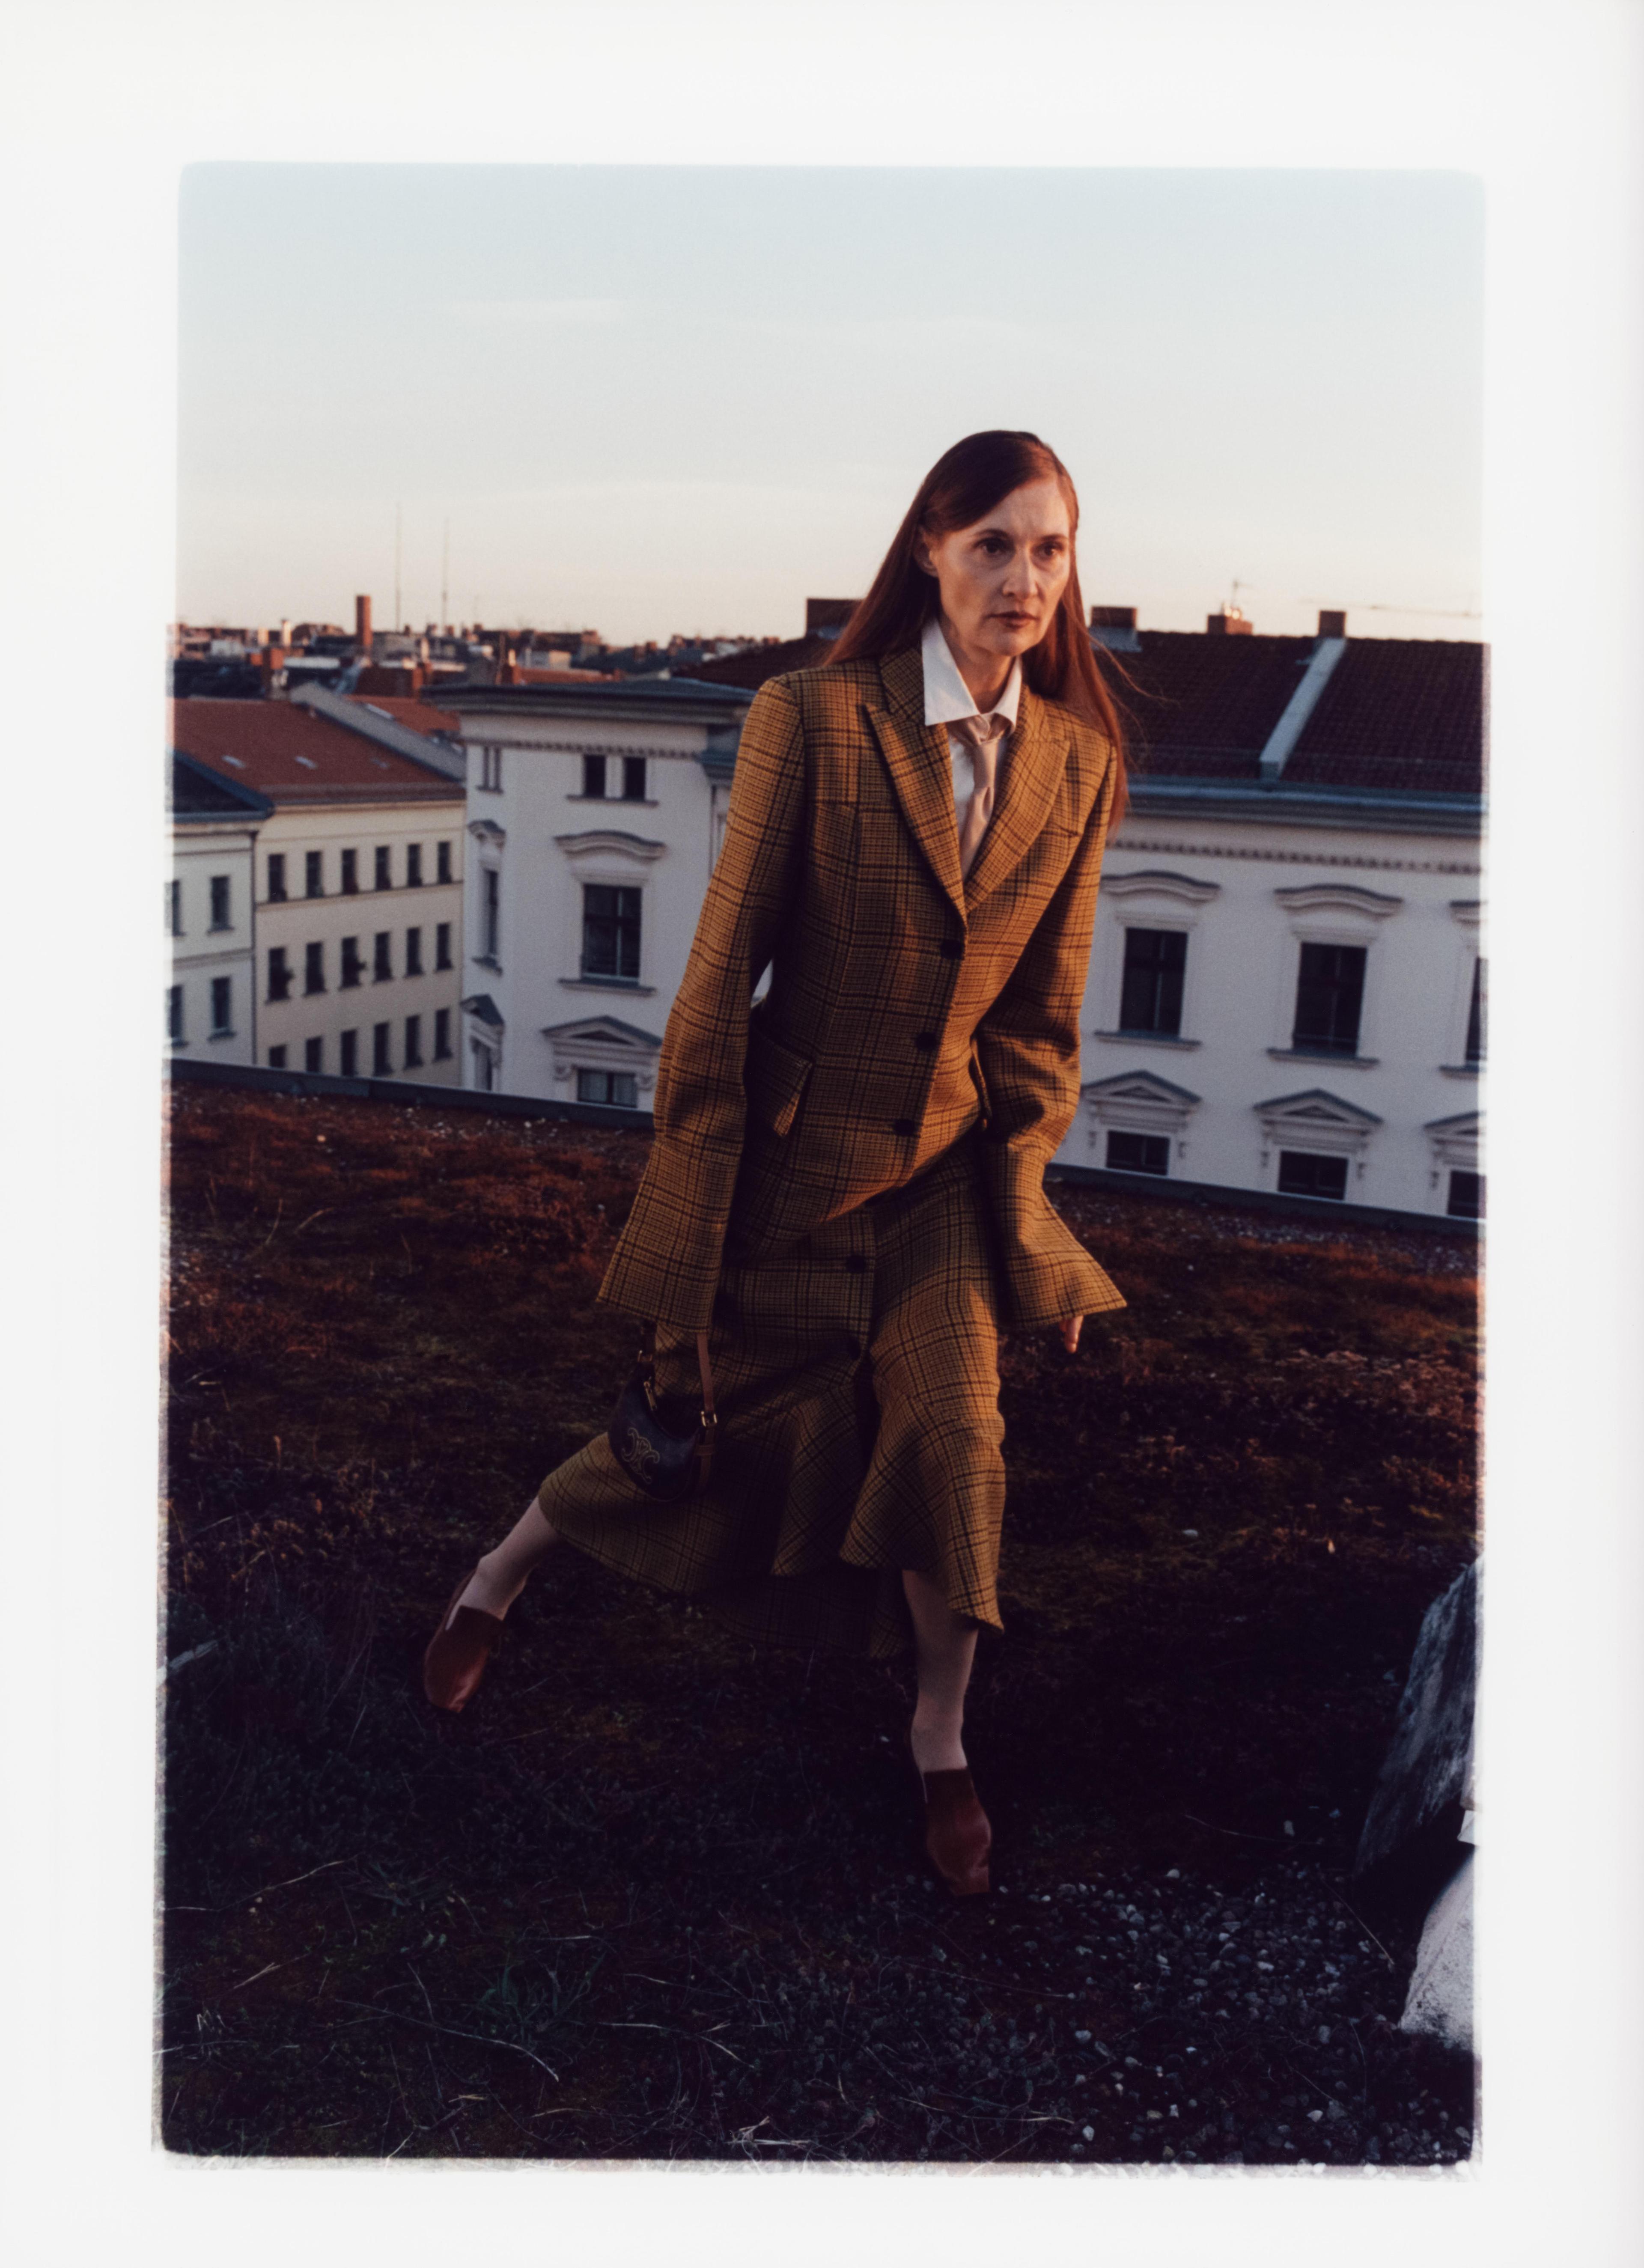 Karina wears Giorgio Armani, Richert Beil, Bottega Veneta and vintage Prada, shot in Berlin